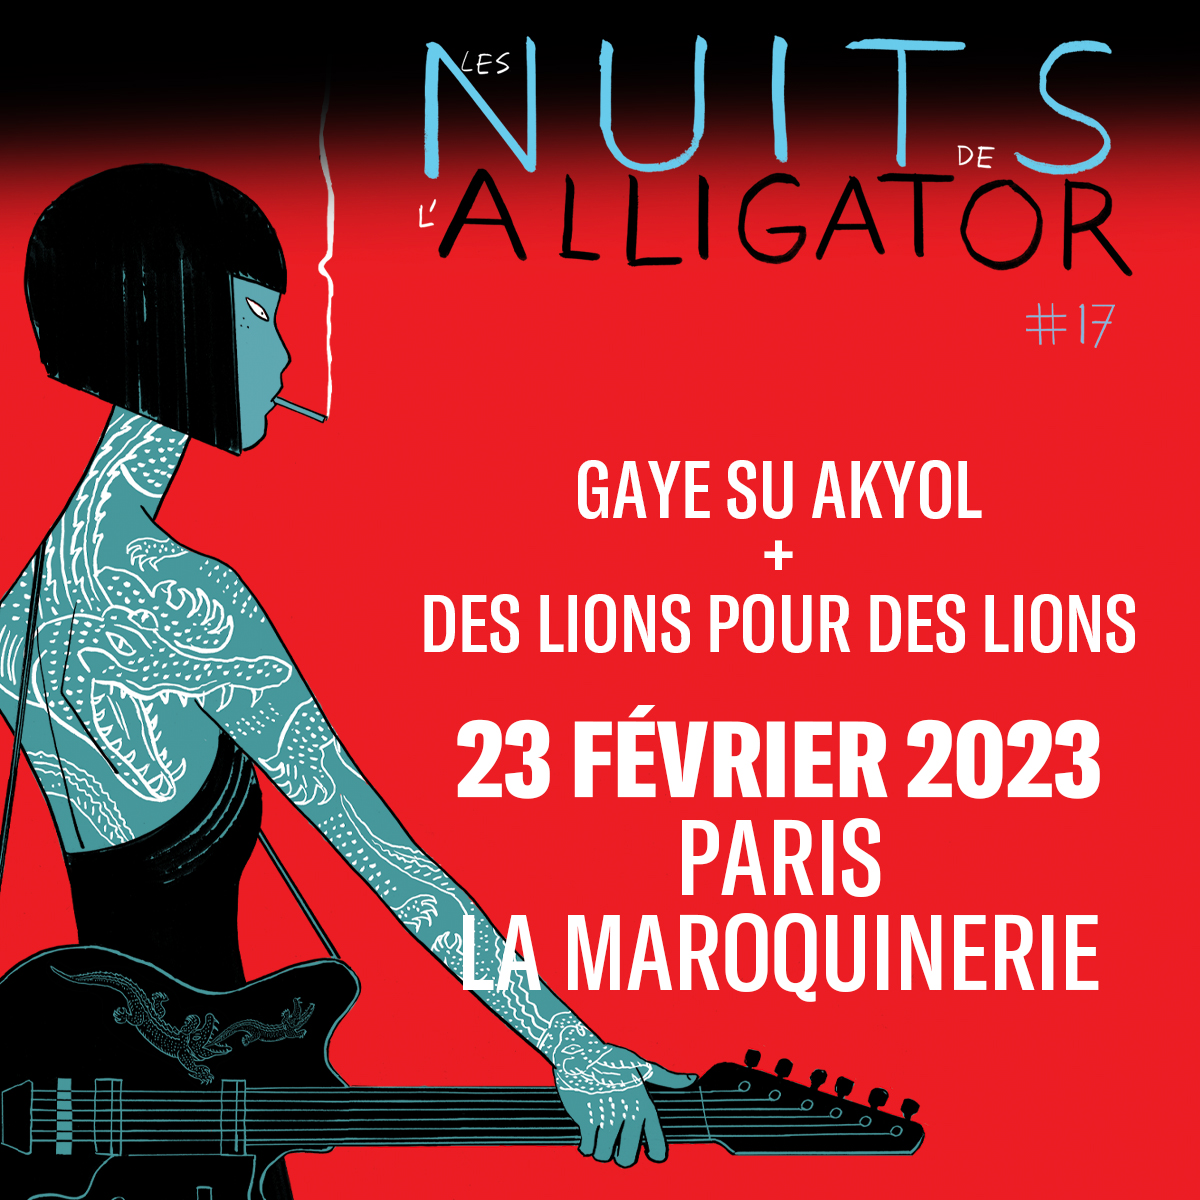 NDA 2023 : GAYE SU AKYOL, DES LIONS POUR DES LIONS